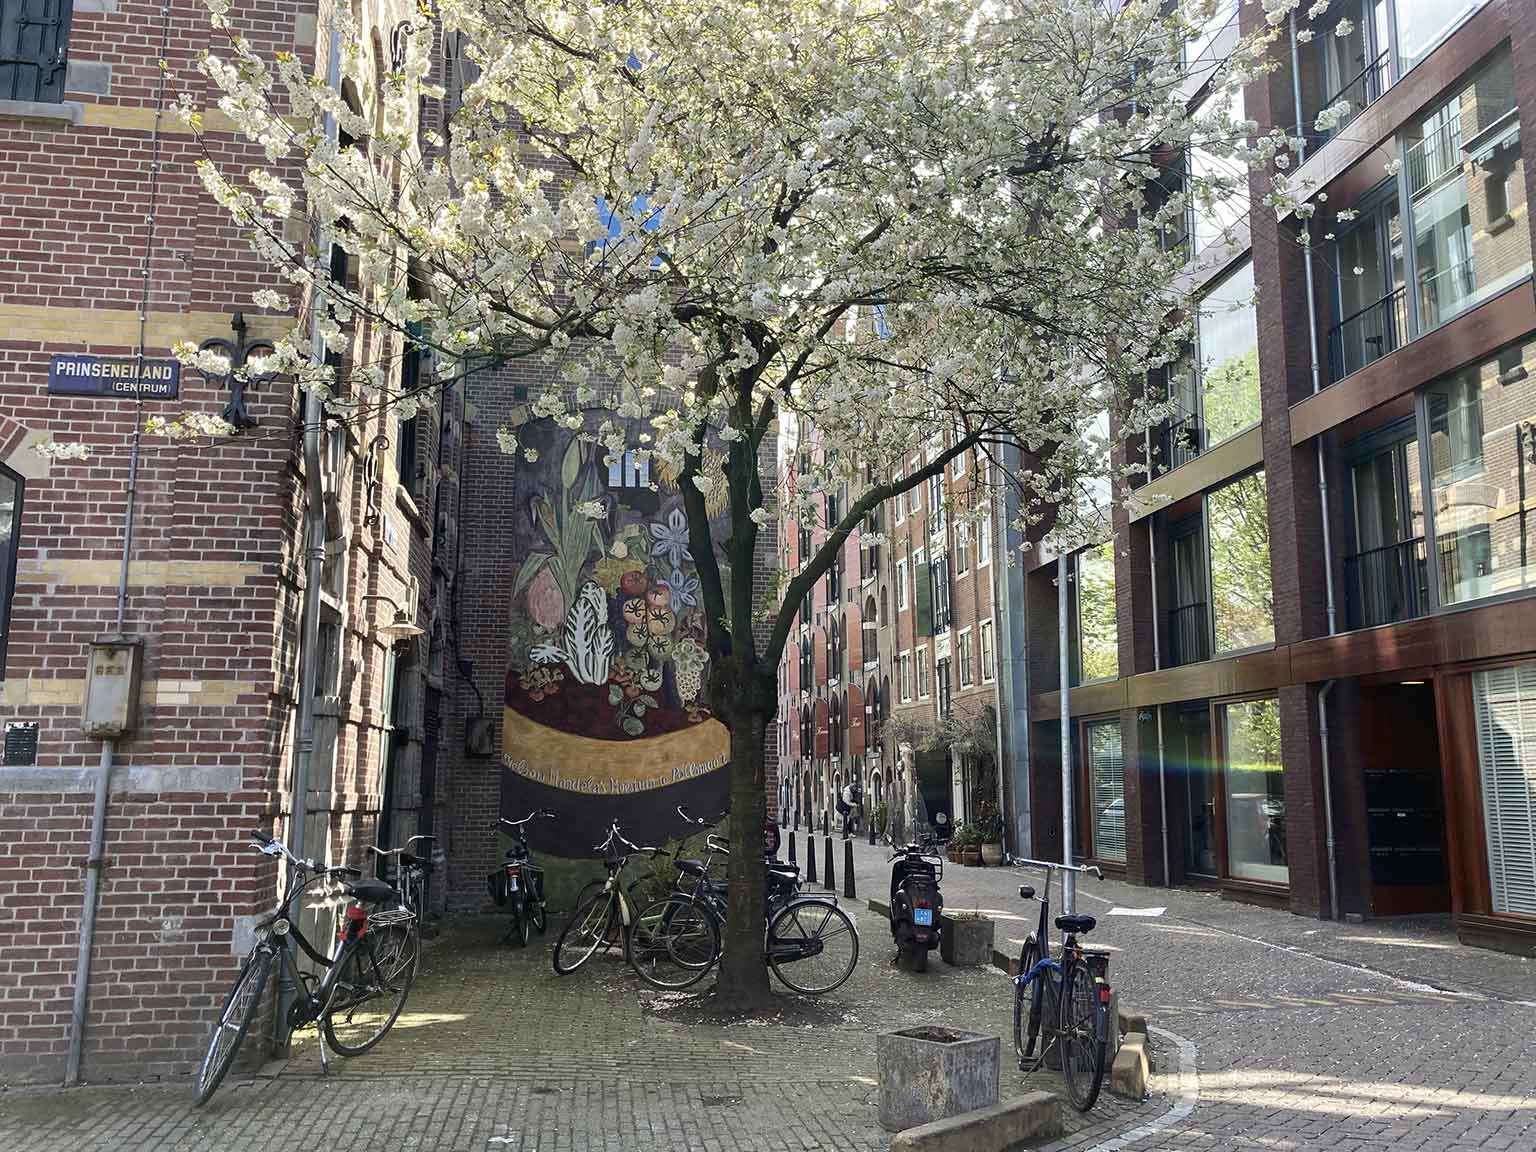 Prinseneiland, Amsterdam, mural of Nelson Mandela’s kitchen garden at Pollsmoor